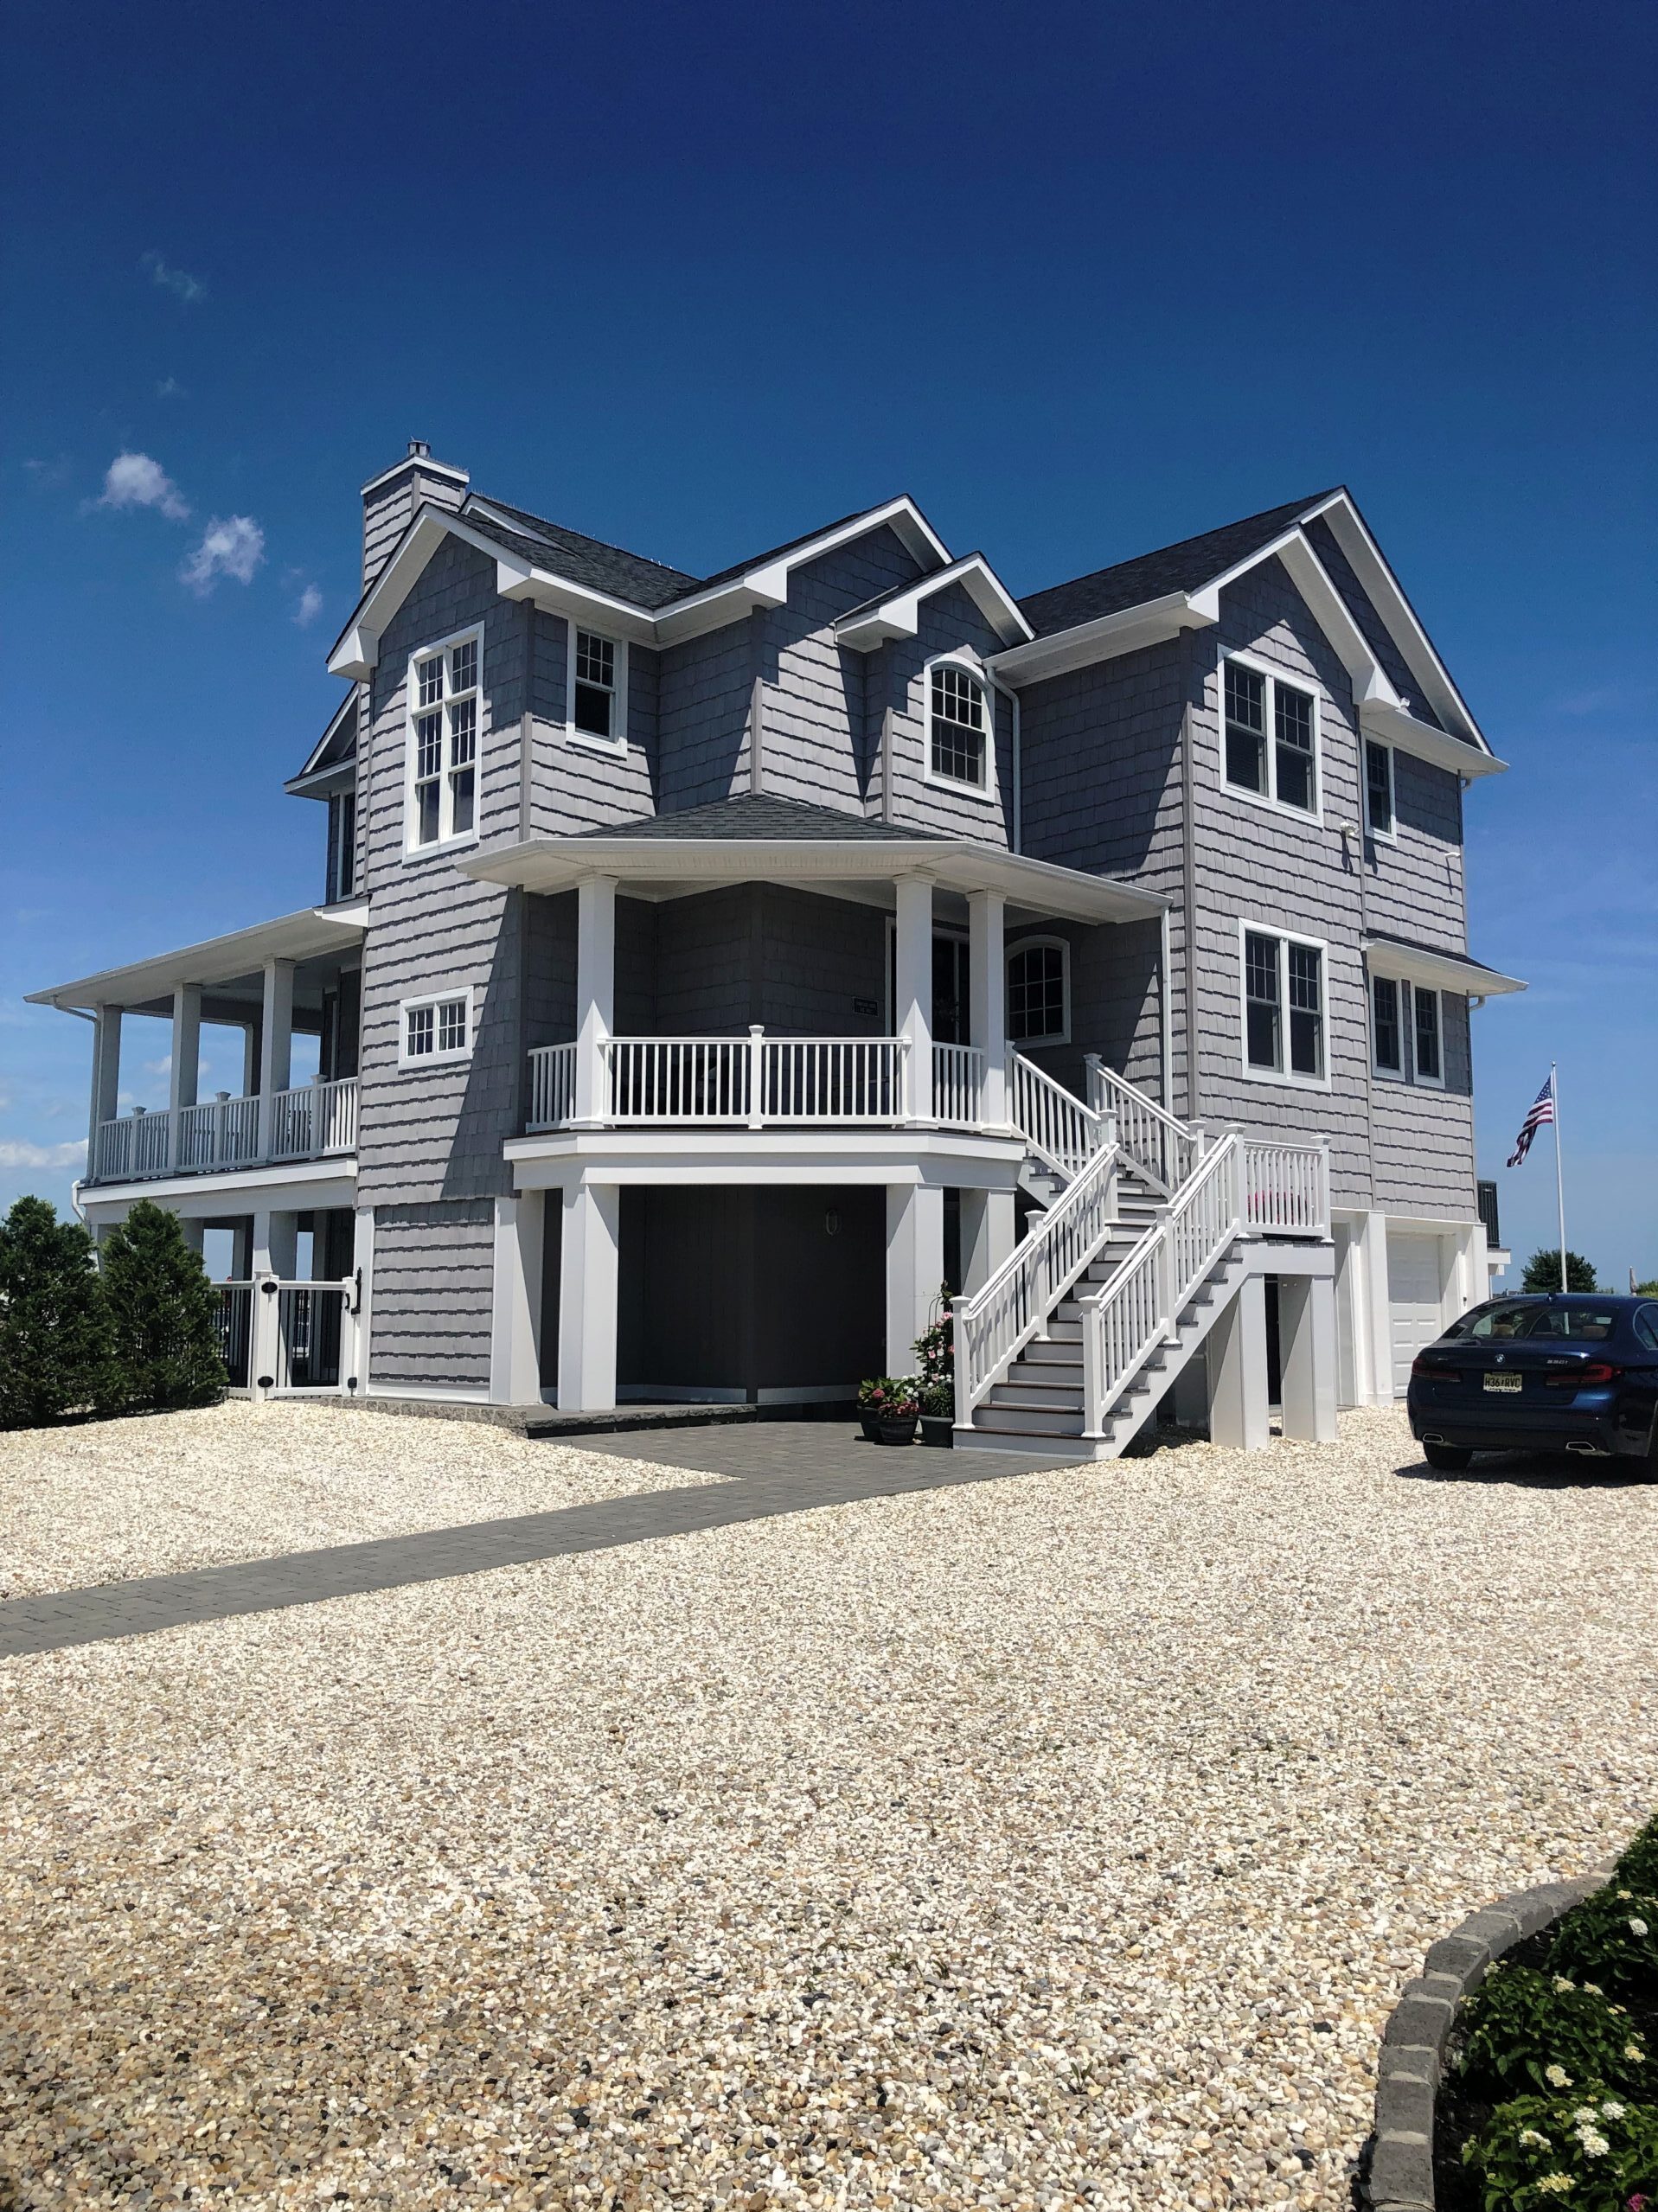 E BROWN CONSTRUCTION LLC  NJ  Home Builder   (908) 454-7097      Home Improvement Contractor / Carpentry & Punch Lists————-Warren, Hunterdon, Somerset, Ocean Counties                   